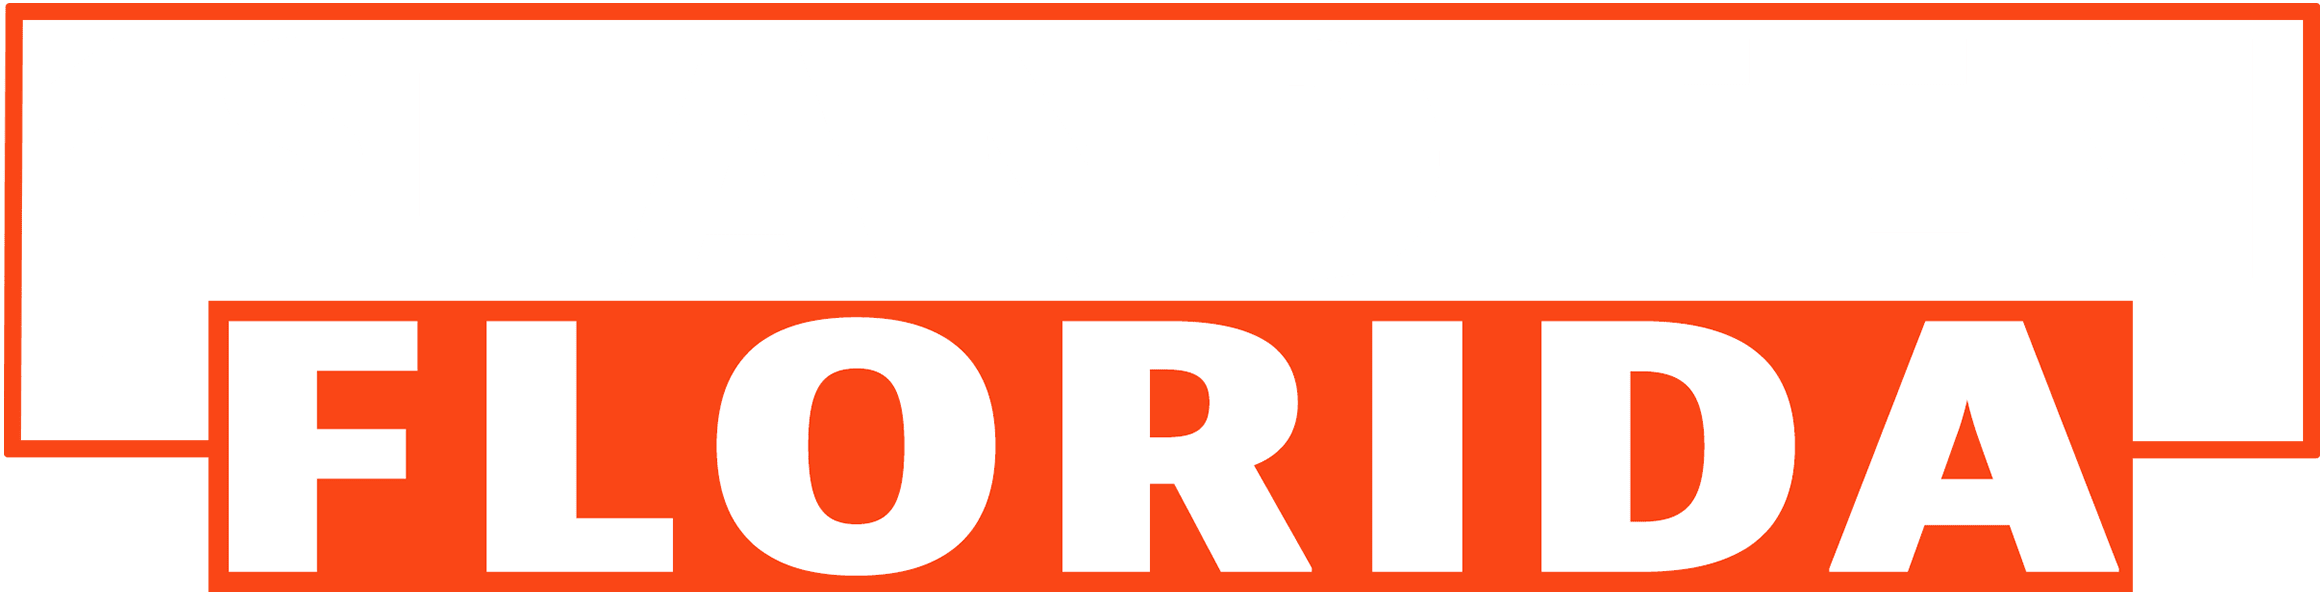 Florida Gators fan forums - 1standTenFlorida